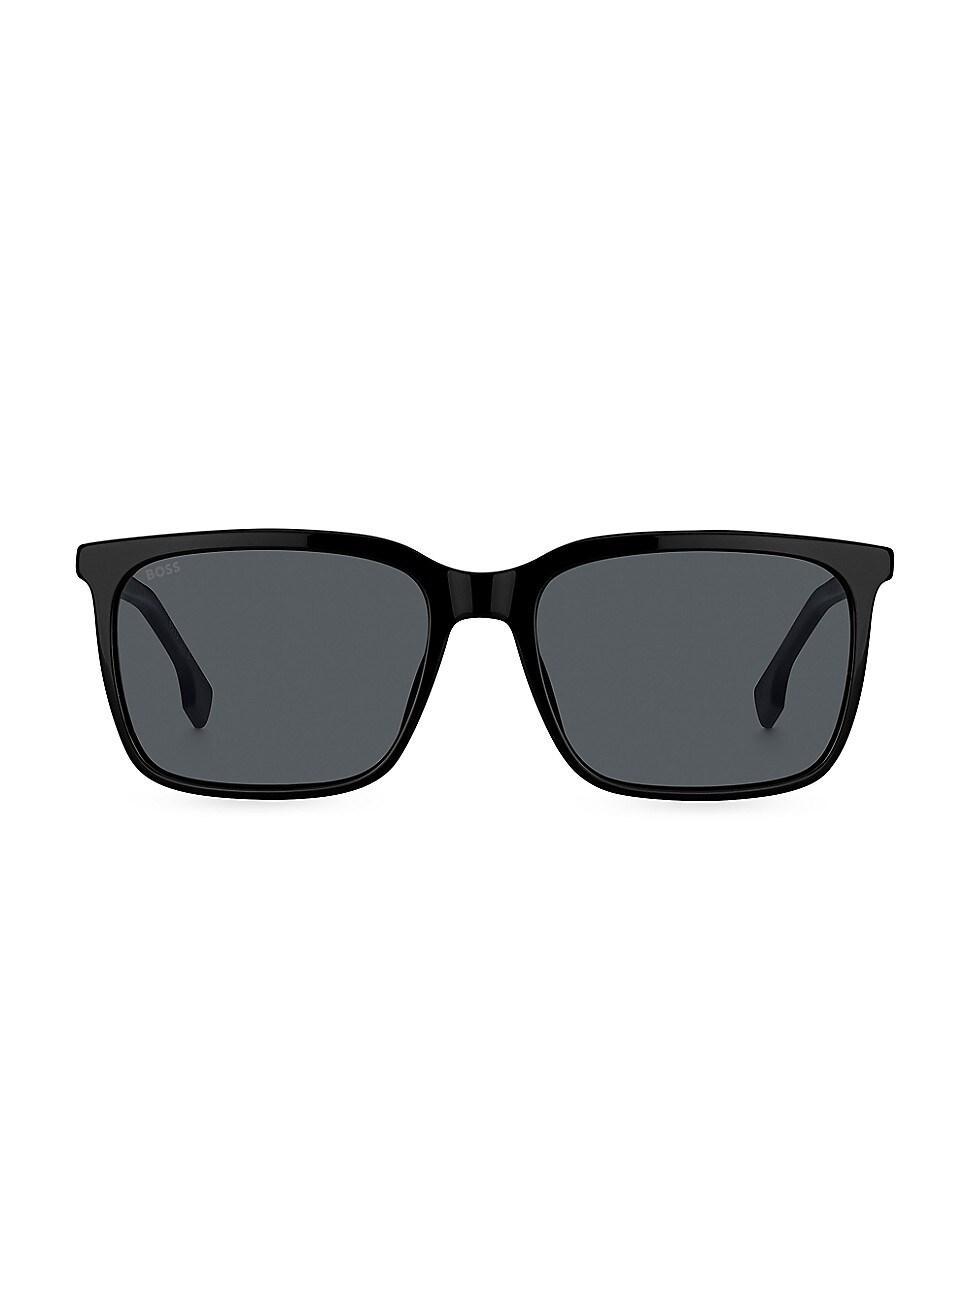 BOSS 57mm Rectangular Sunglasses Product Image